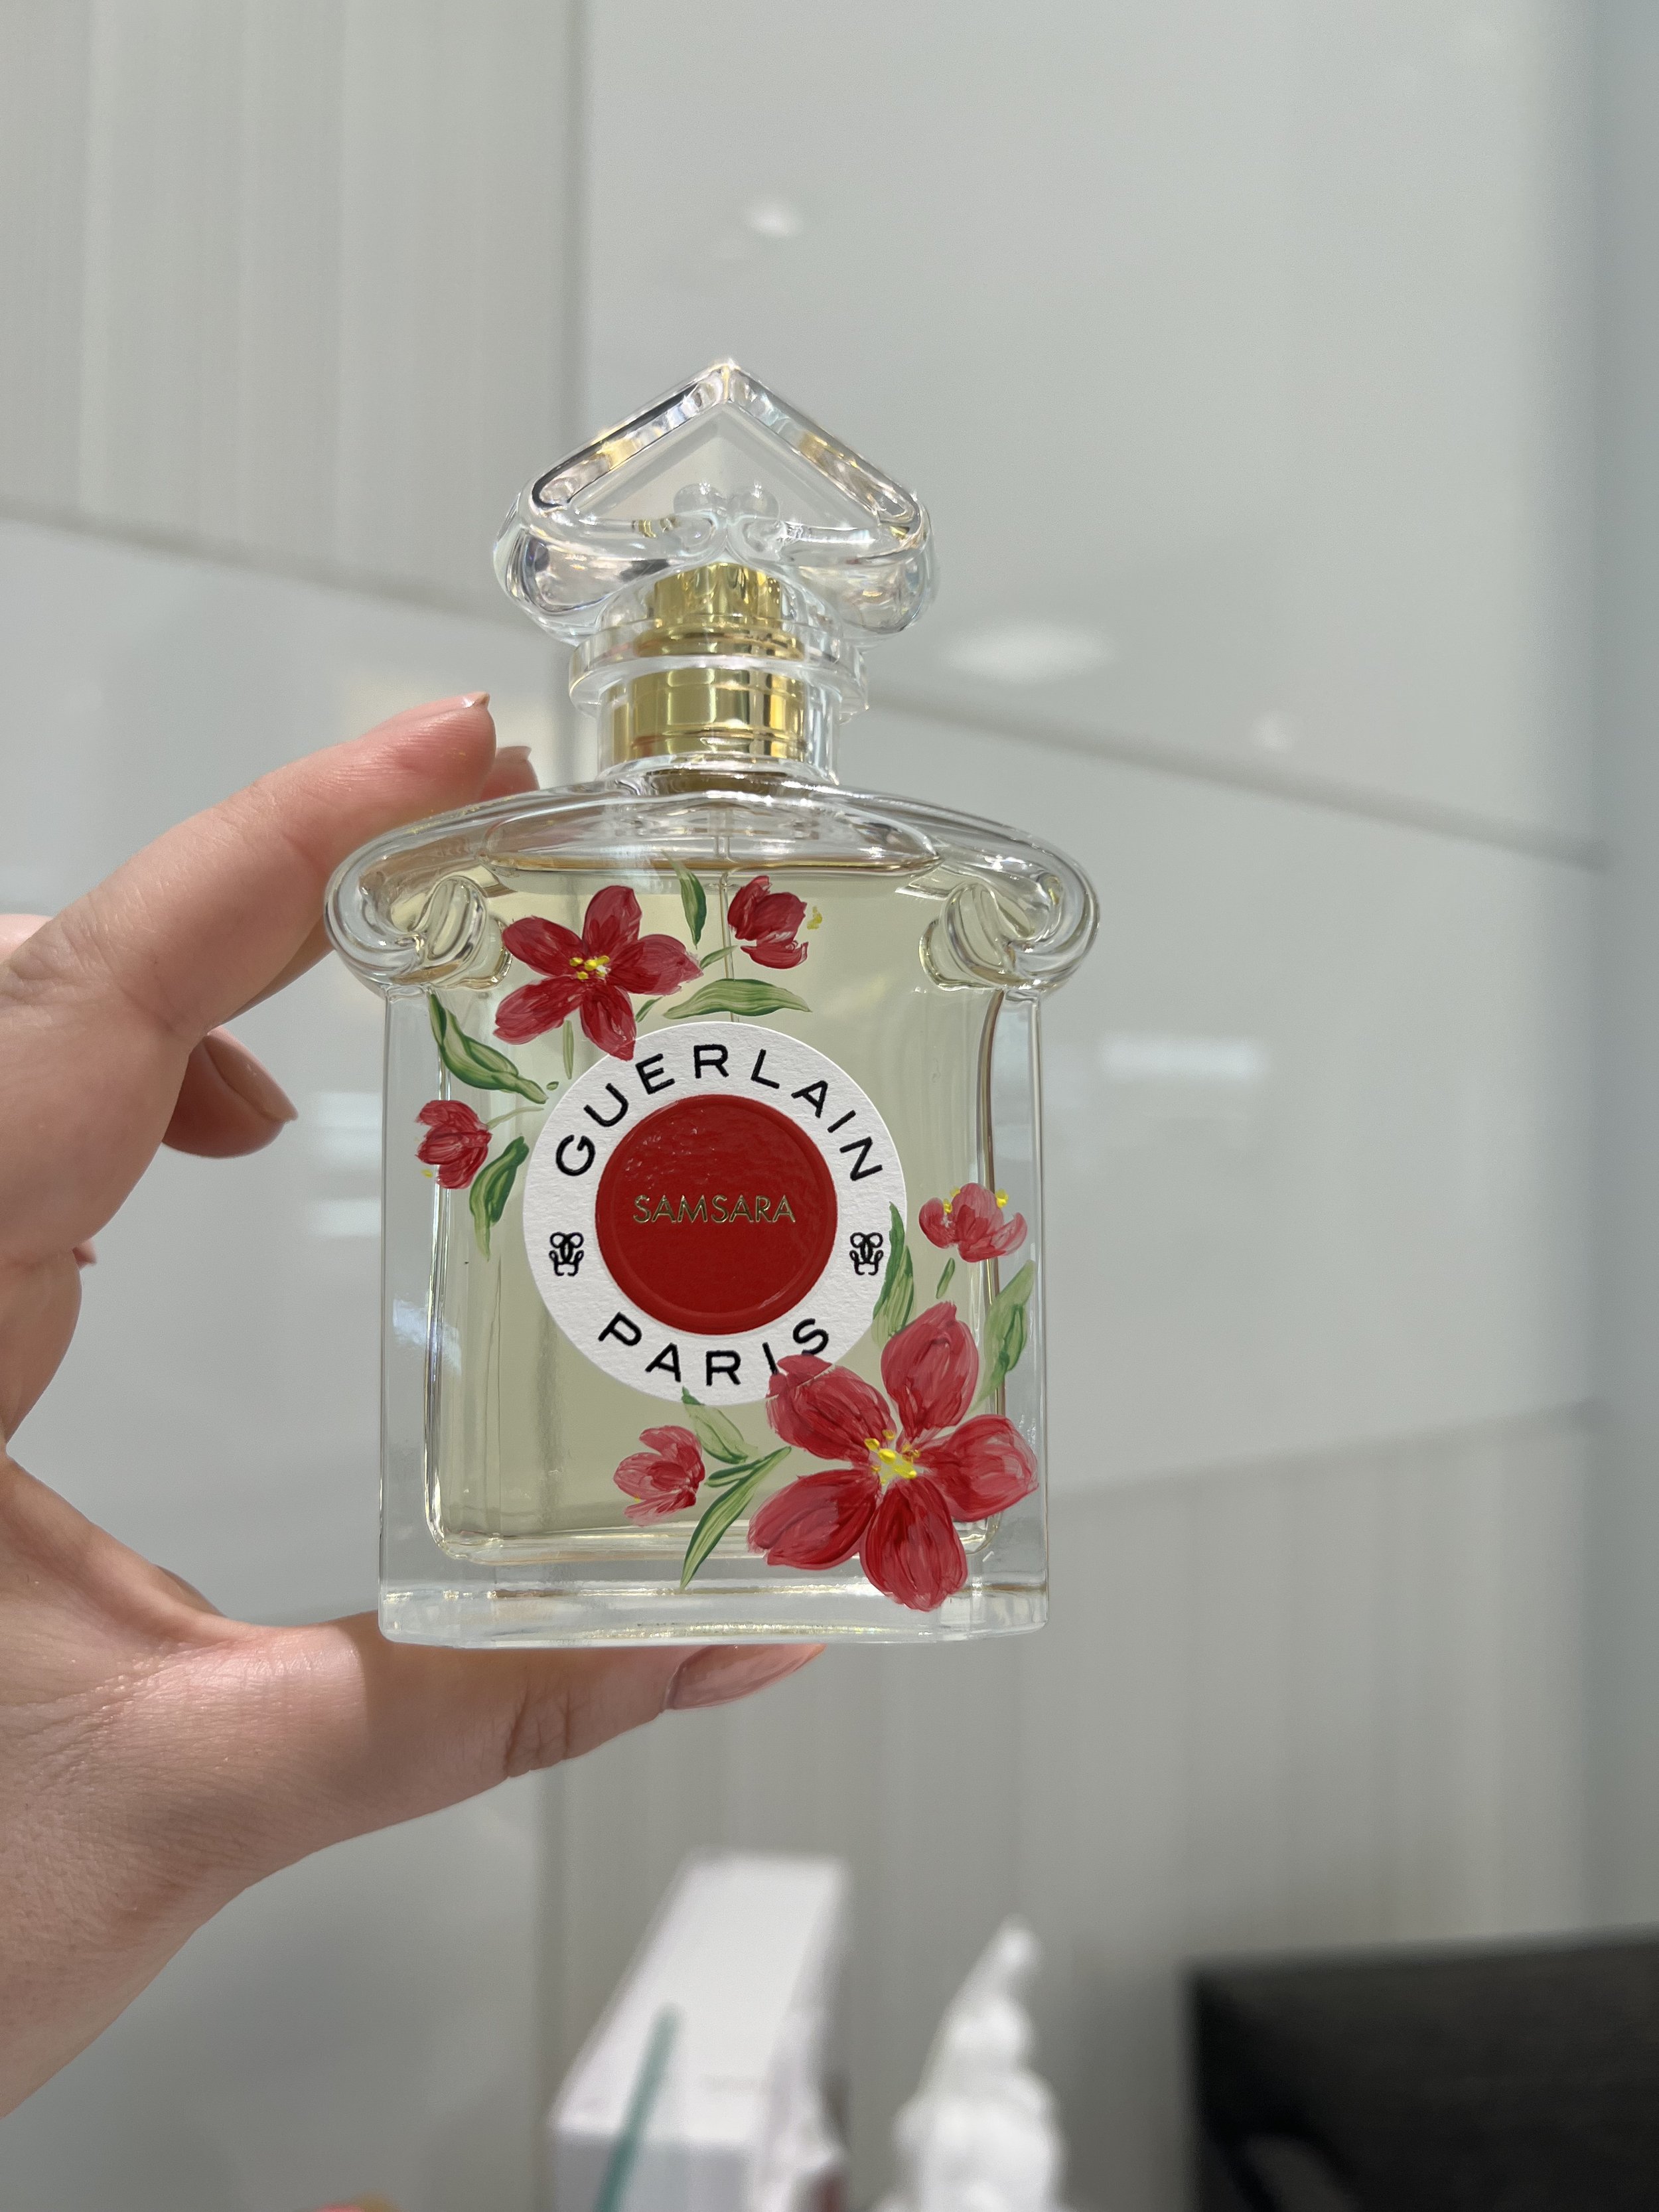 floral-painting-on-guerlain-perfume-bottle-by-montreal-artist-jodi-tellier.jpeg